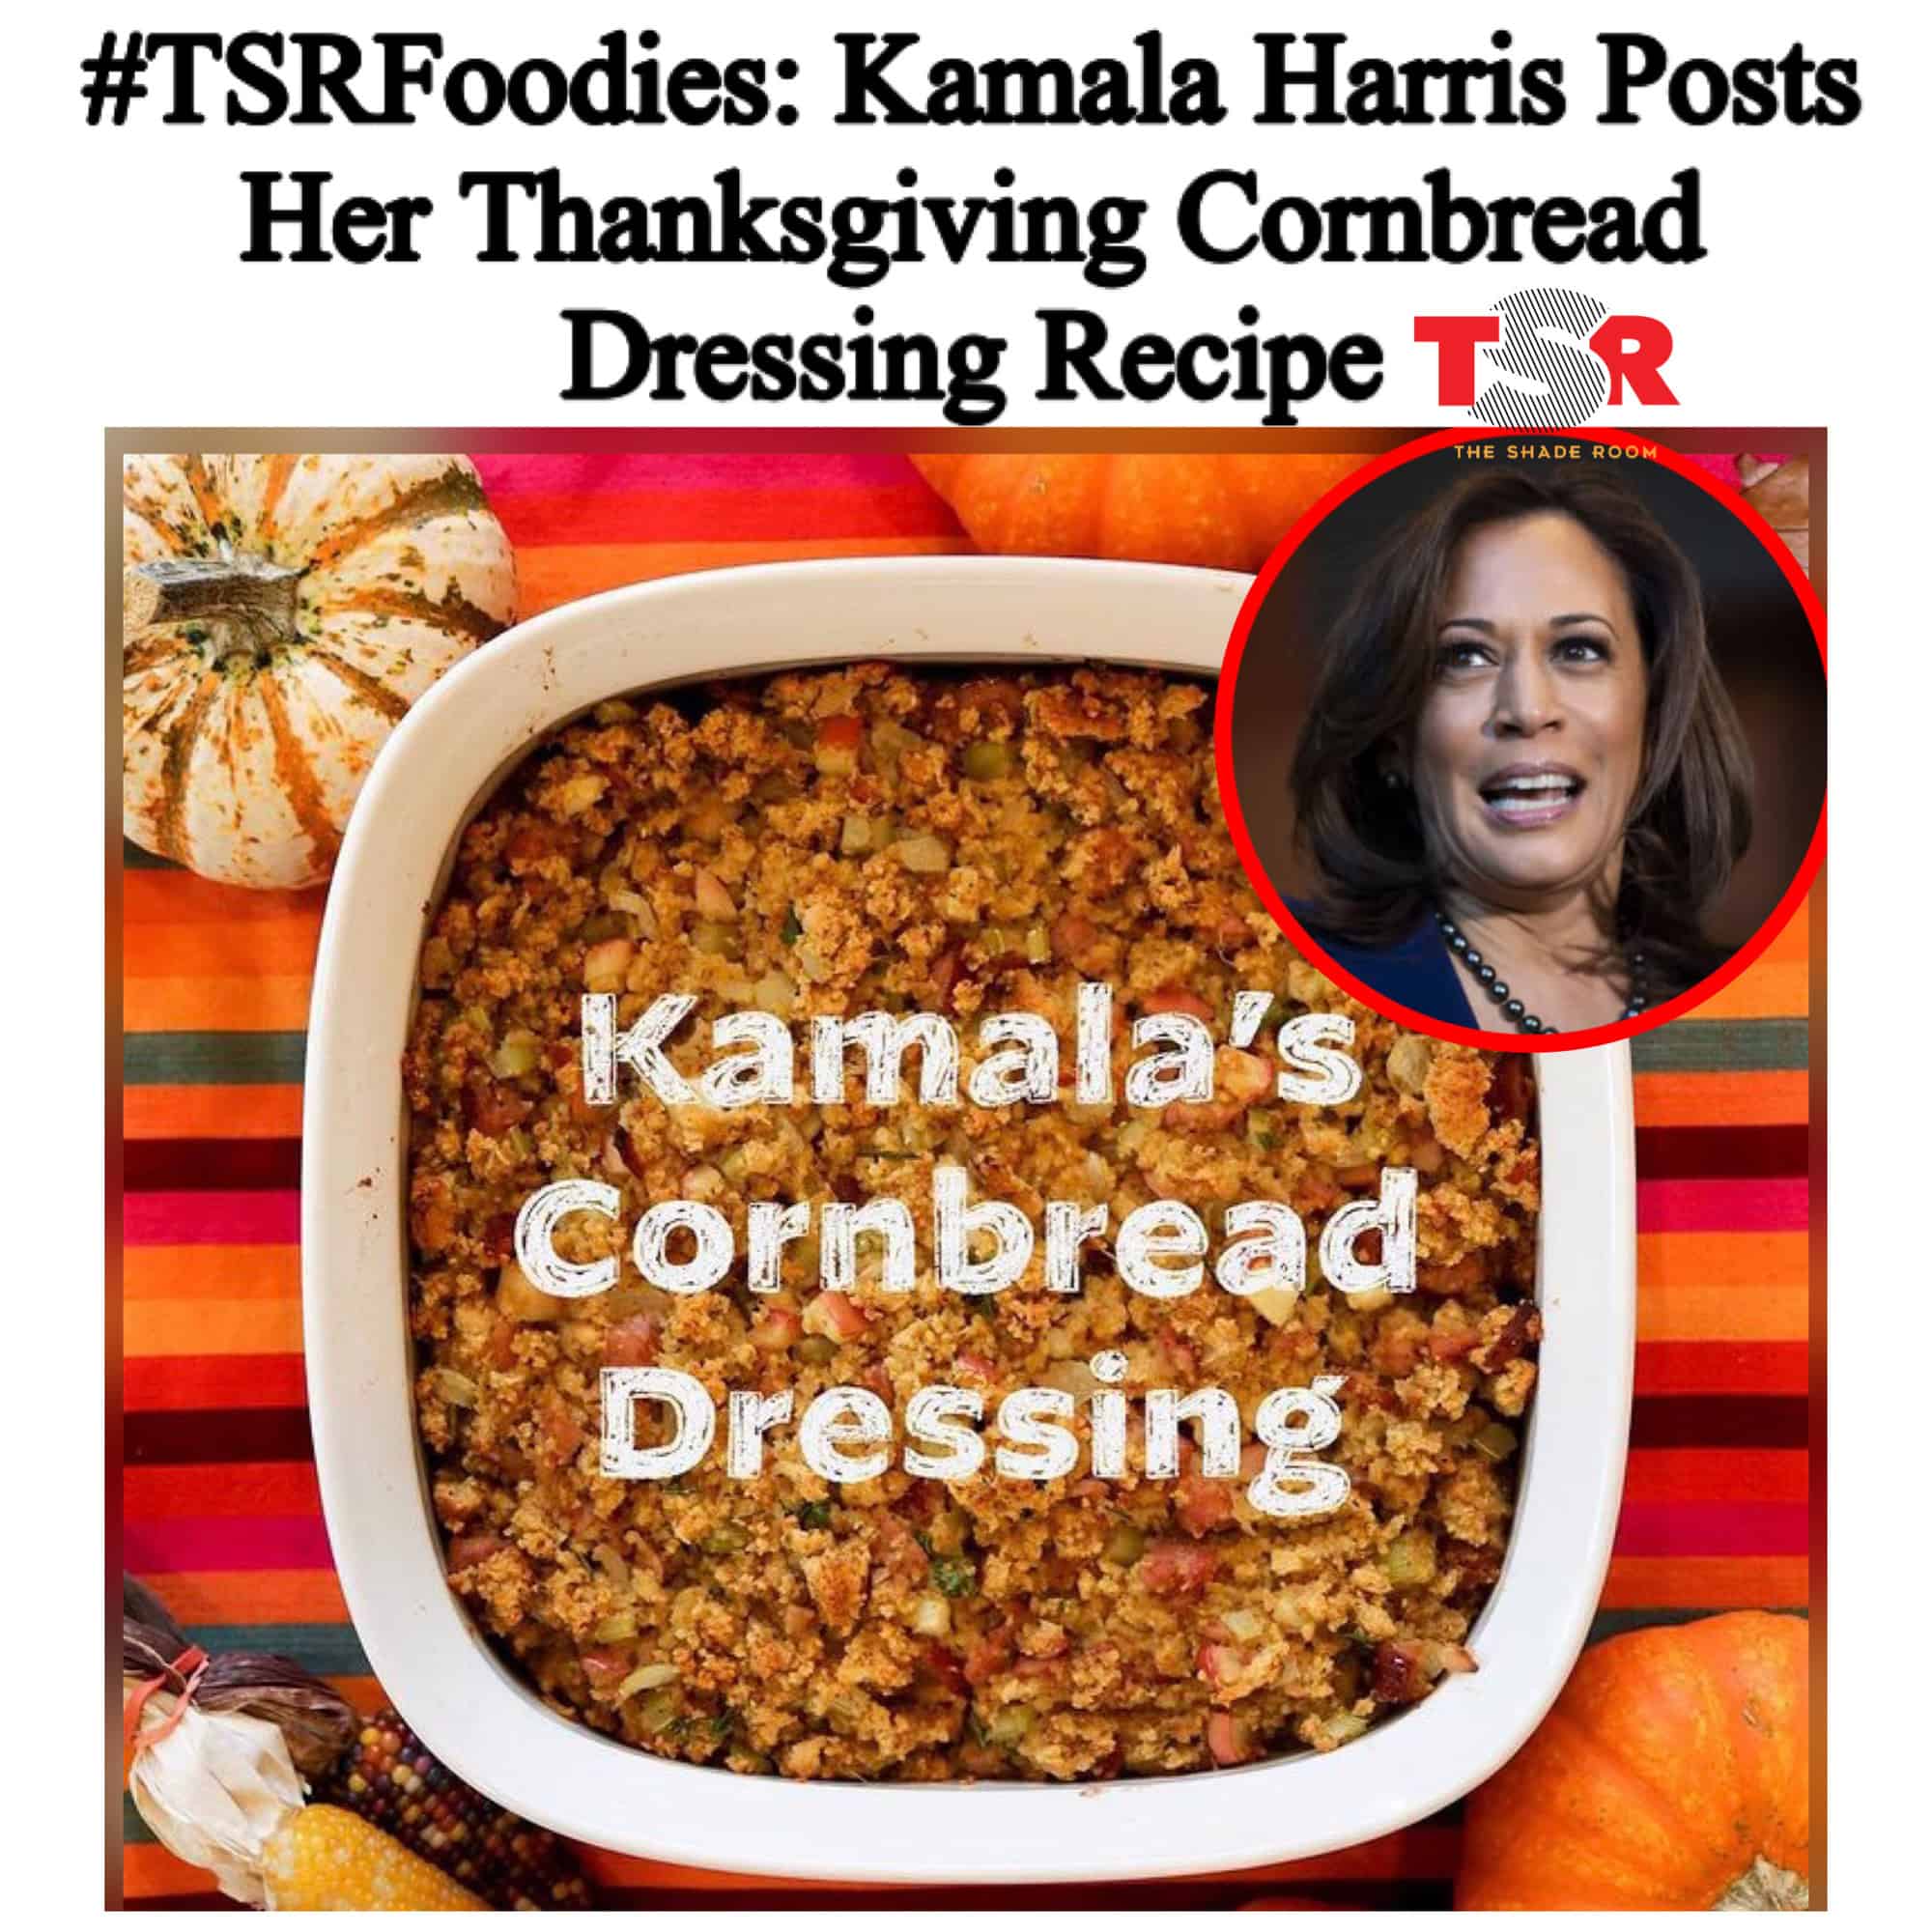 Kamala Harris Posts Her Thanksgiving Cornbread Dressing Recipe